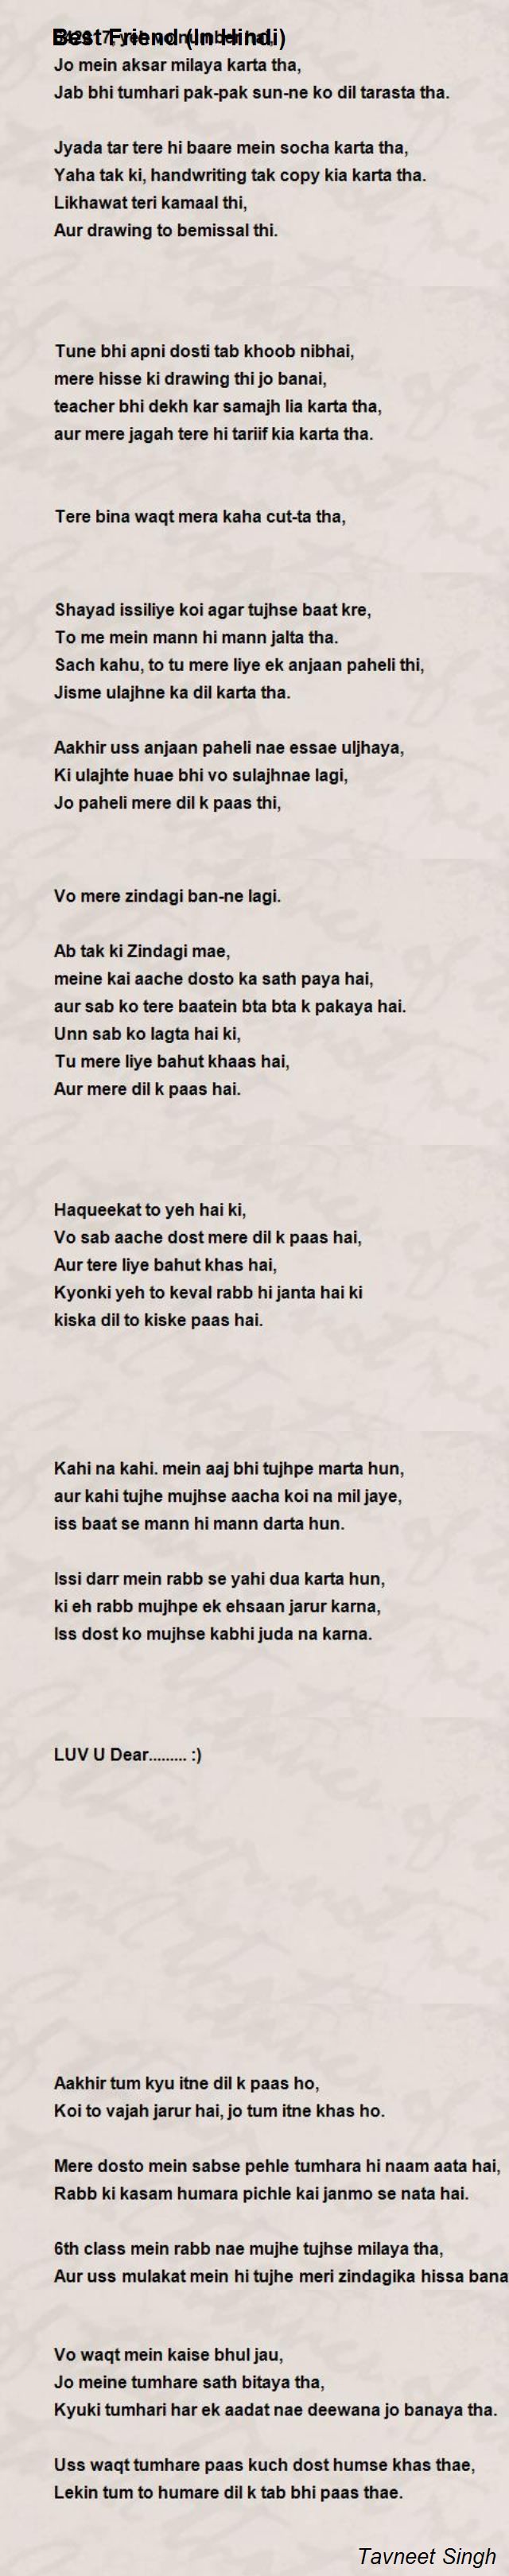 Funny easy hindi poems